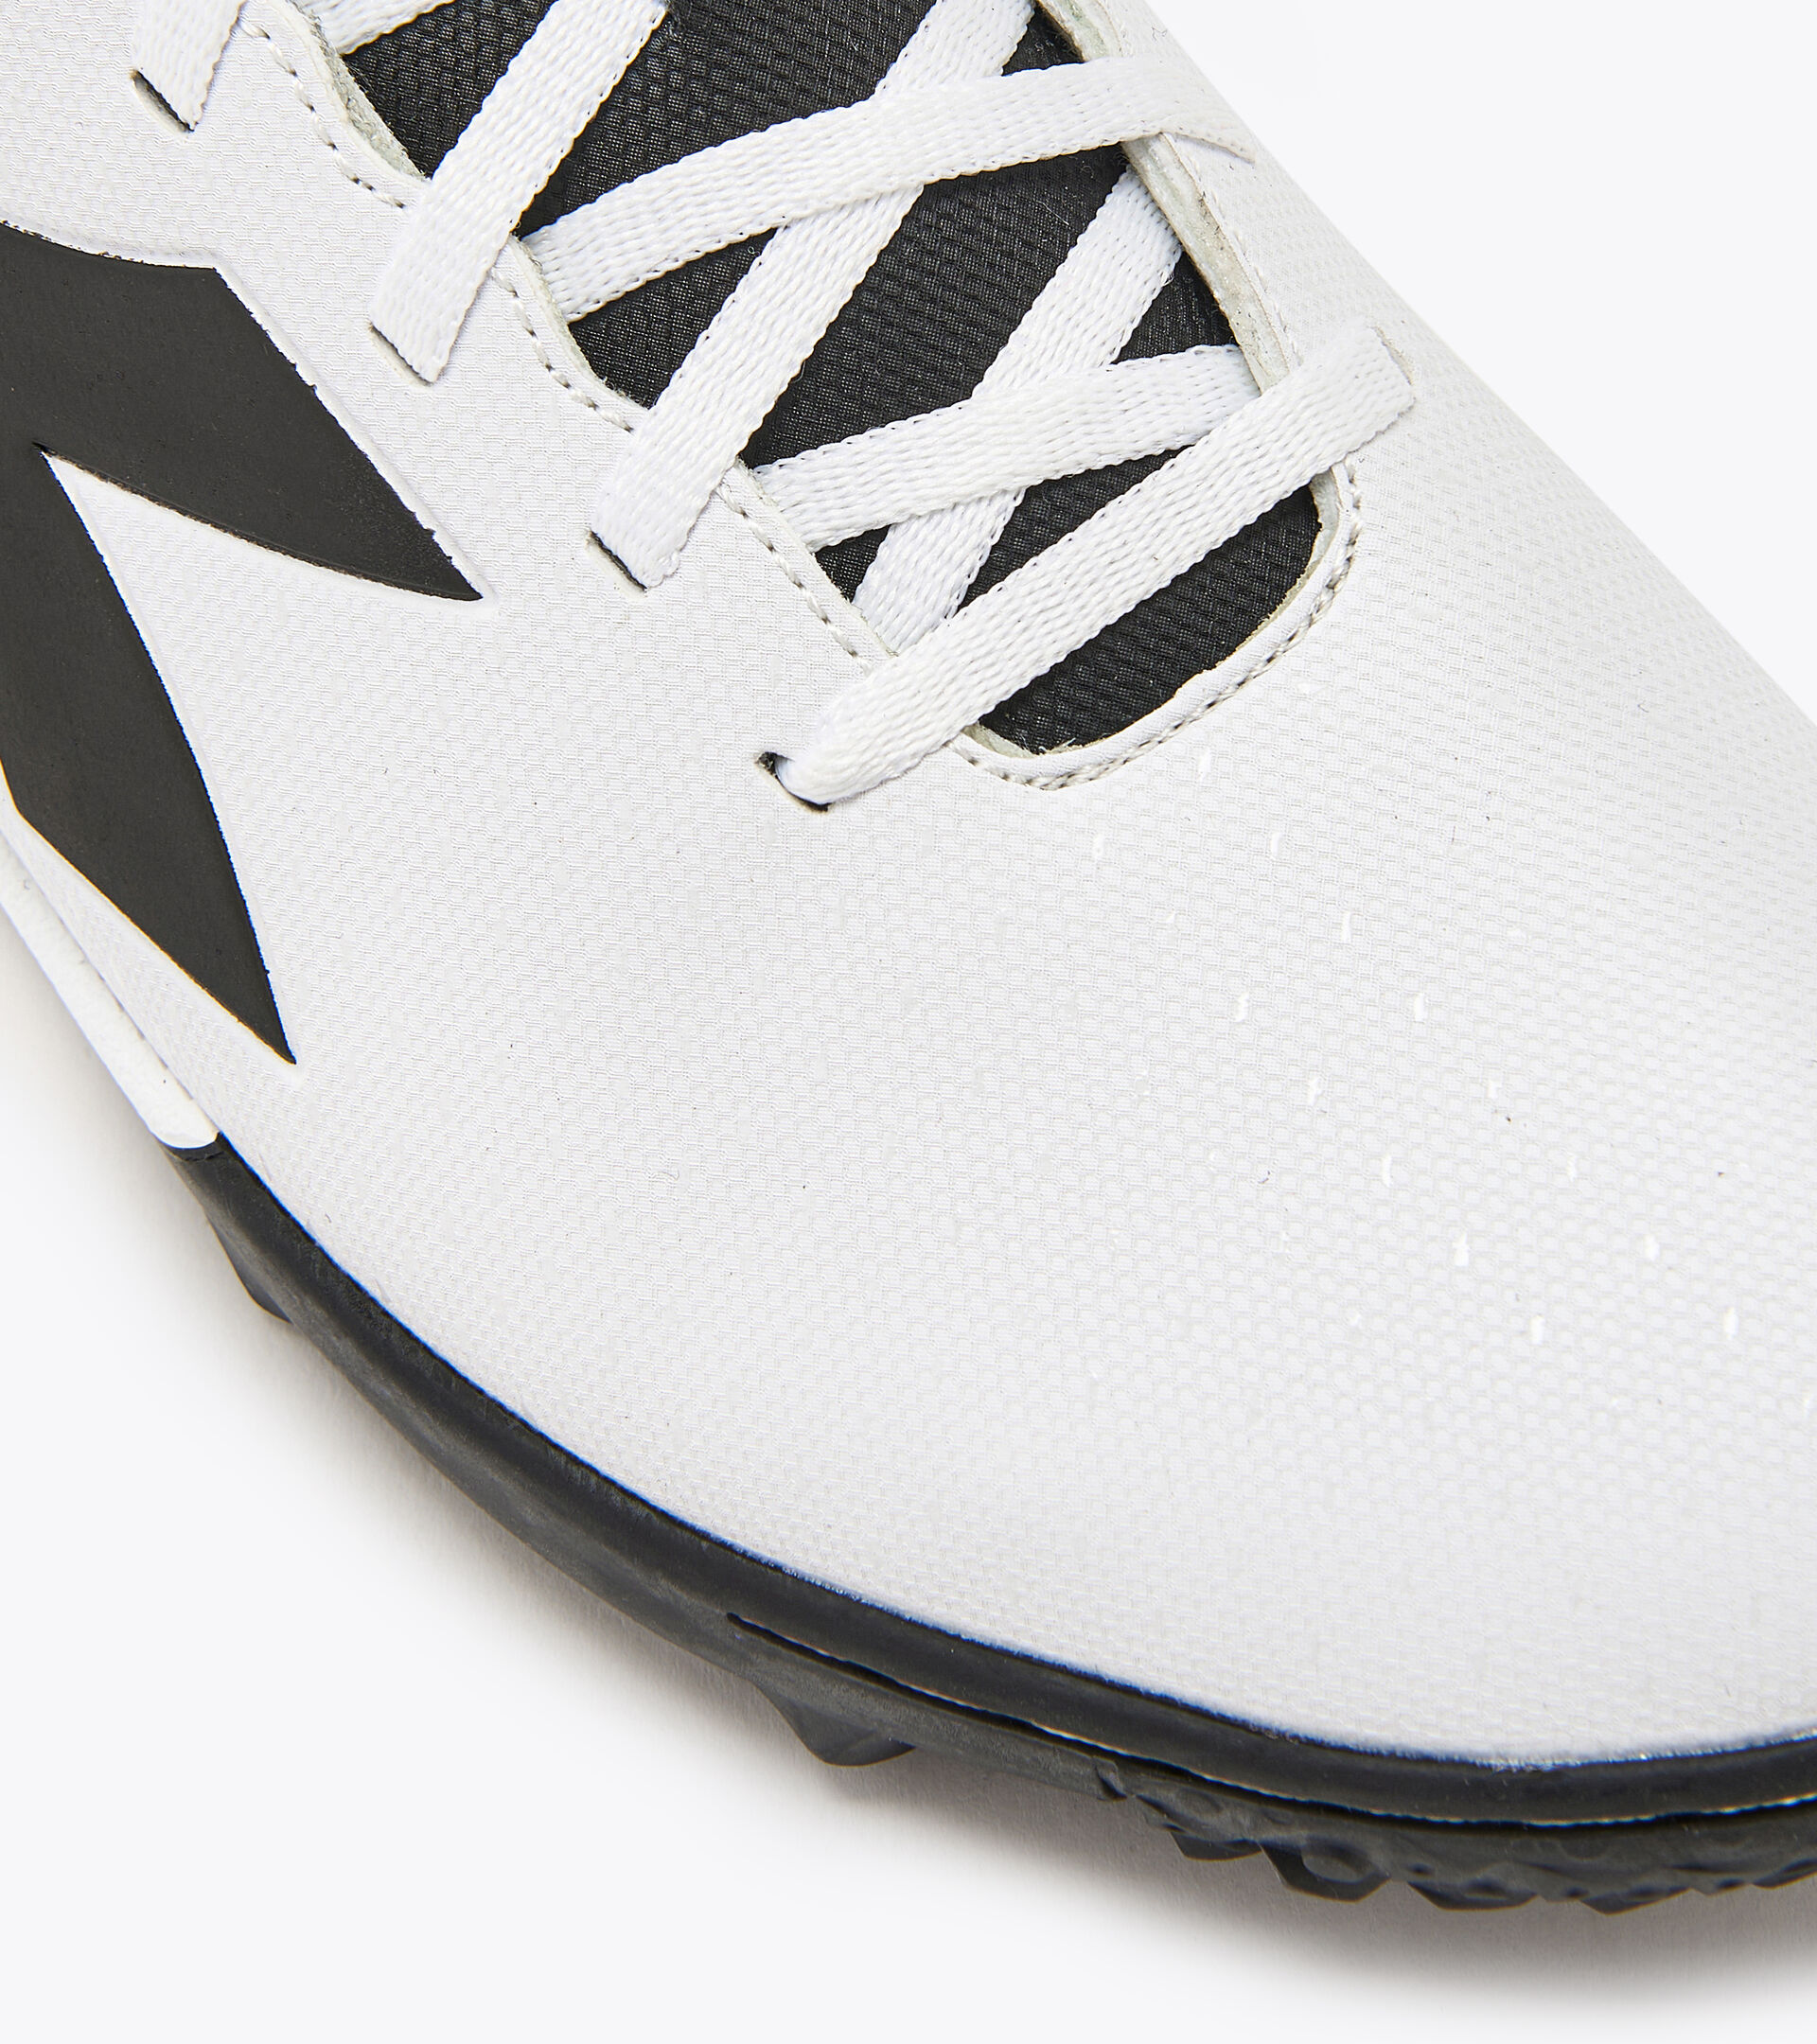 Futsal boot - Specific outsole for synthetic/hard grounds PICHICHI 5 TFR WHITE/BLACK - Diadora